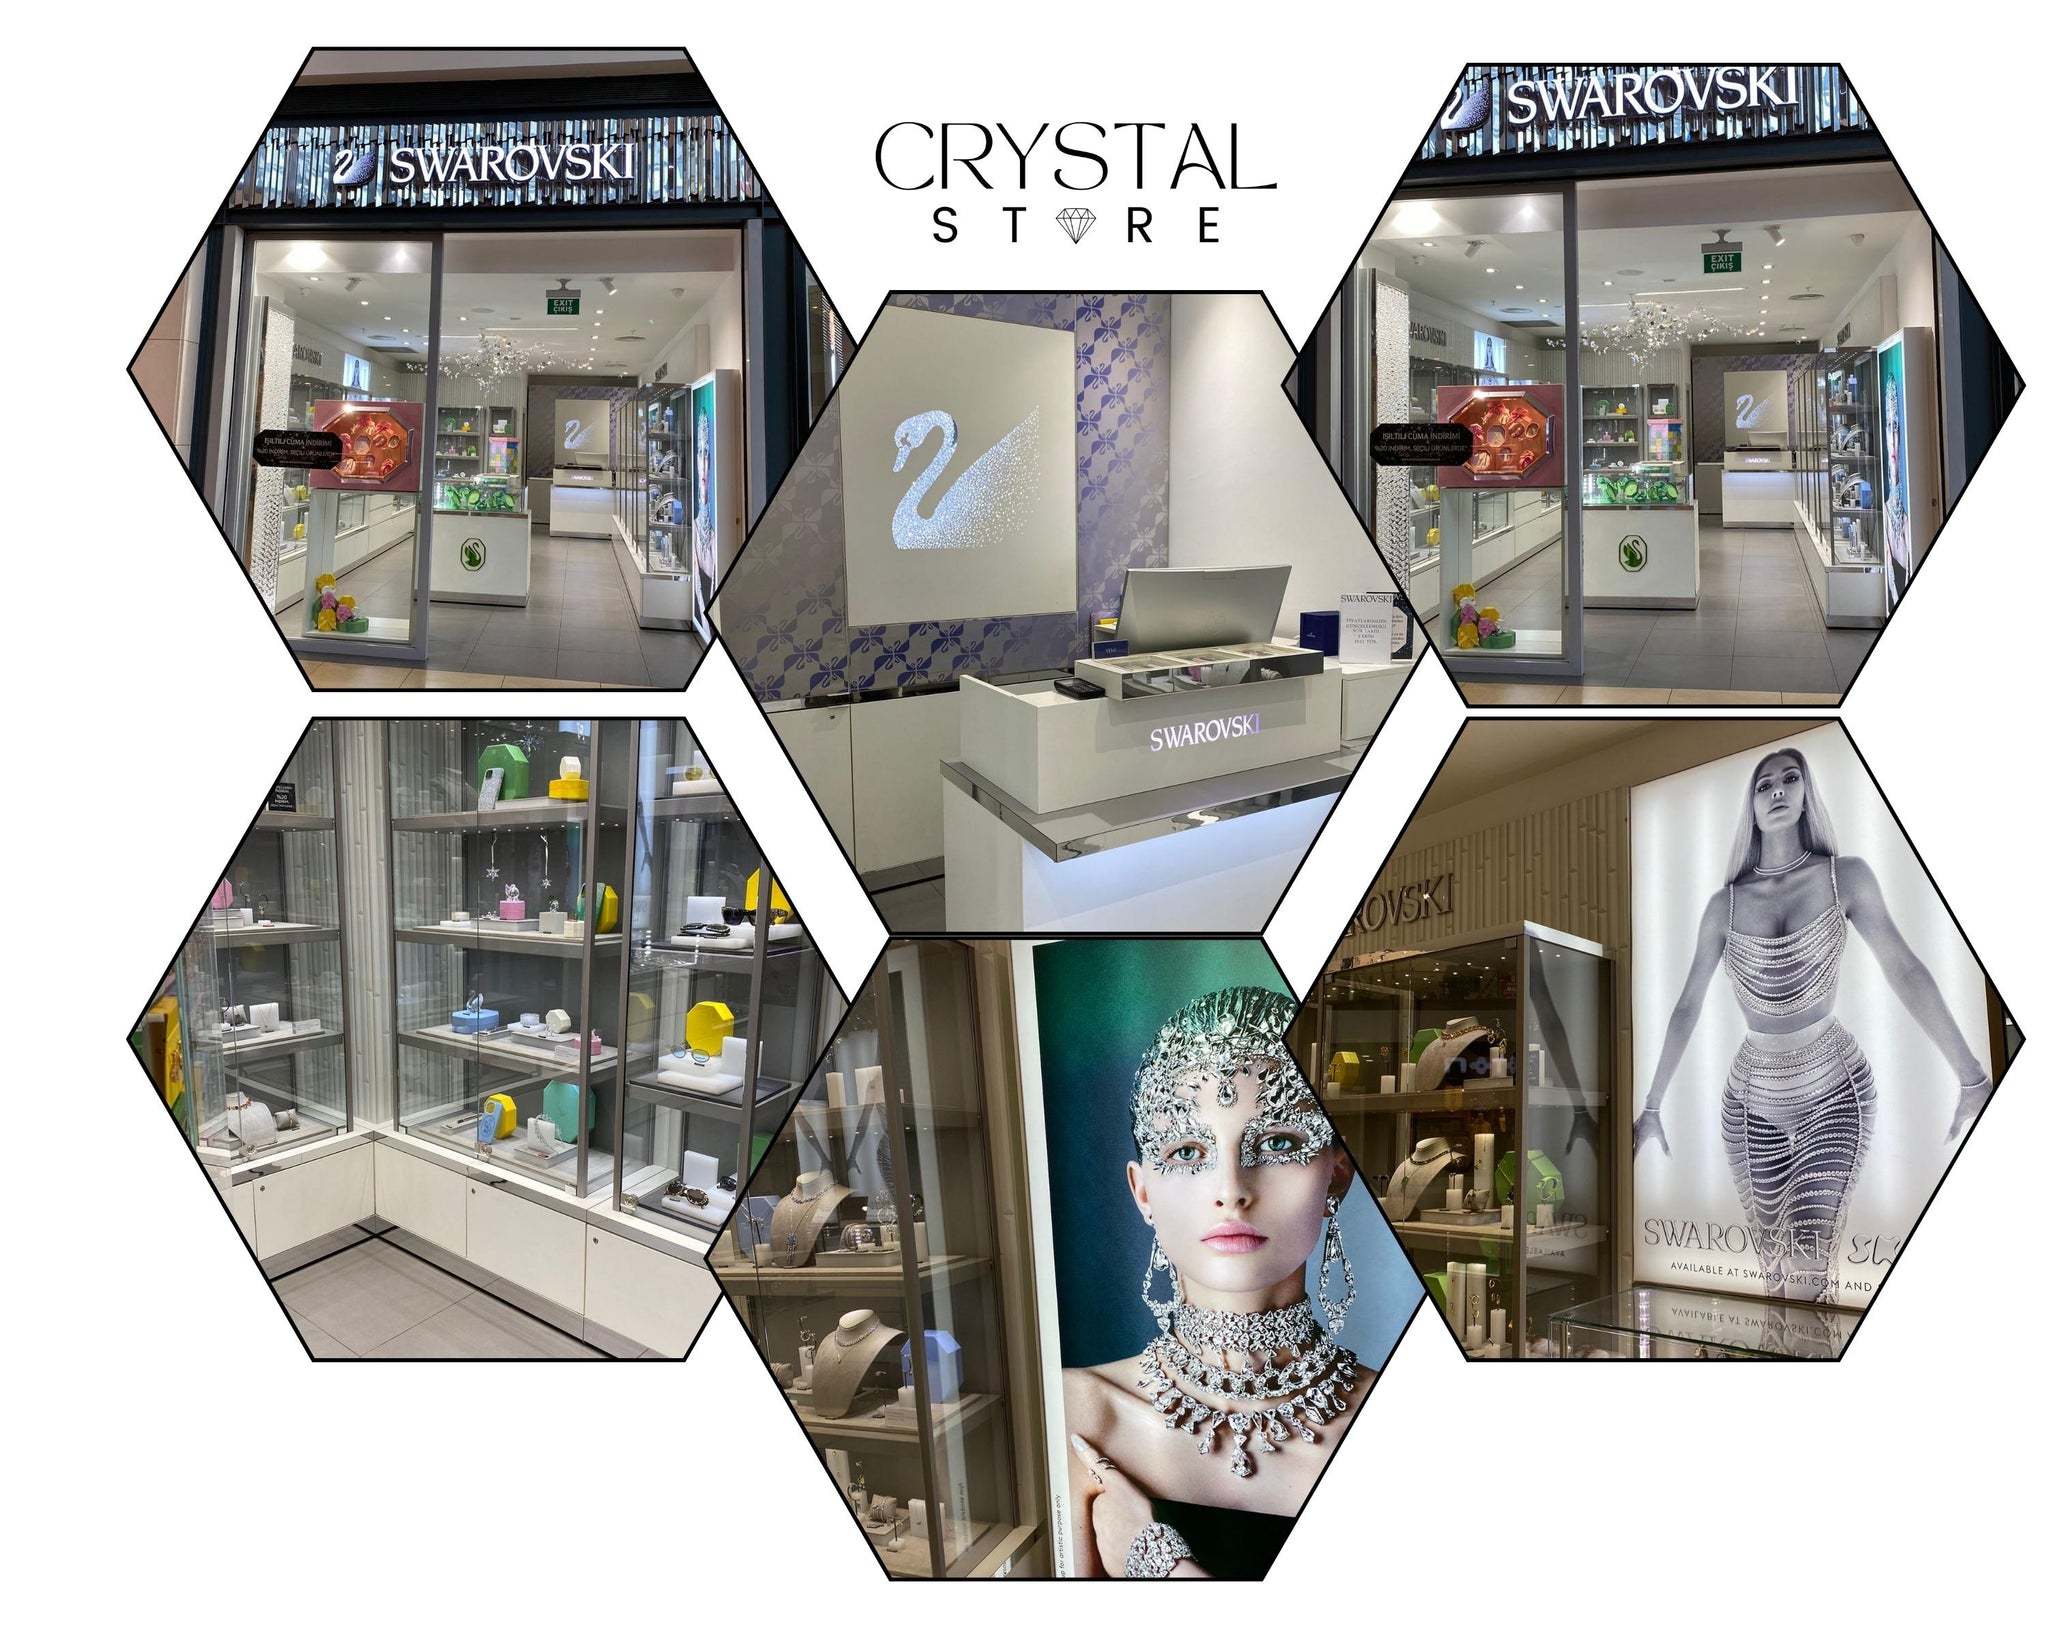 CrystalStore